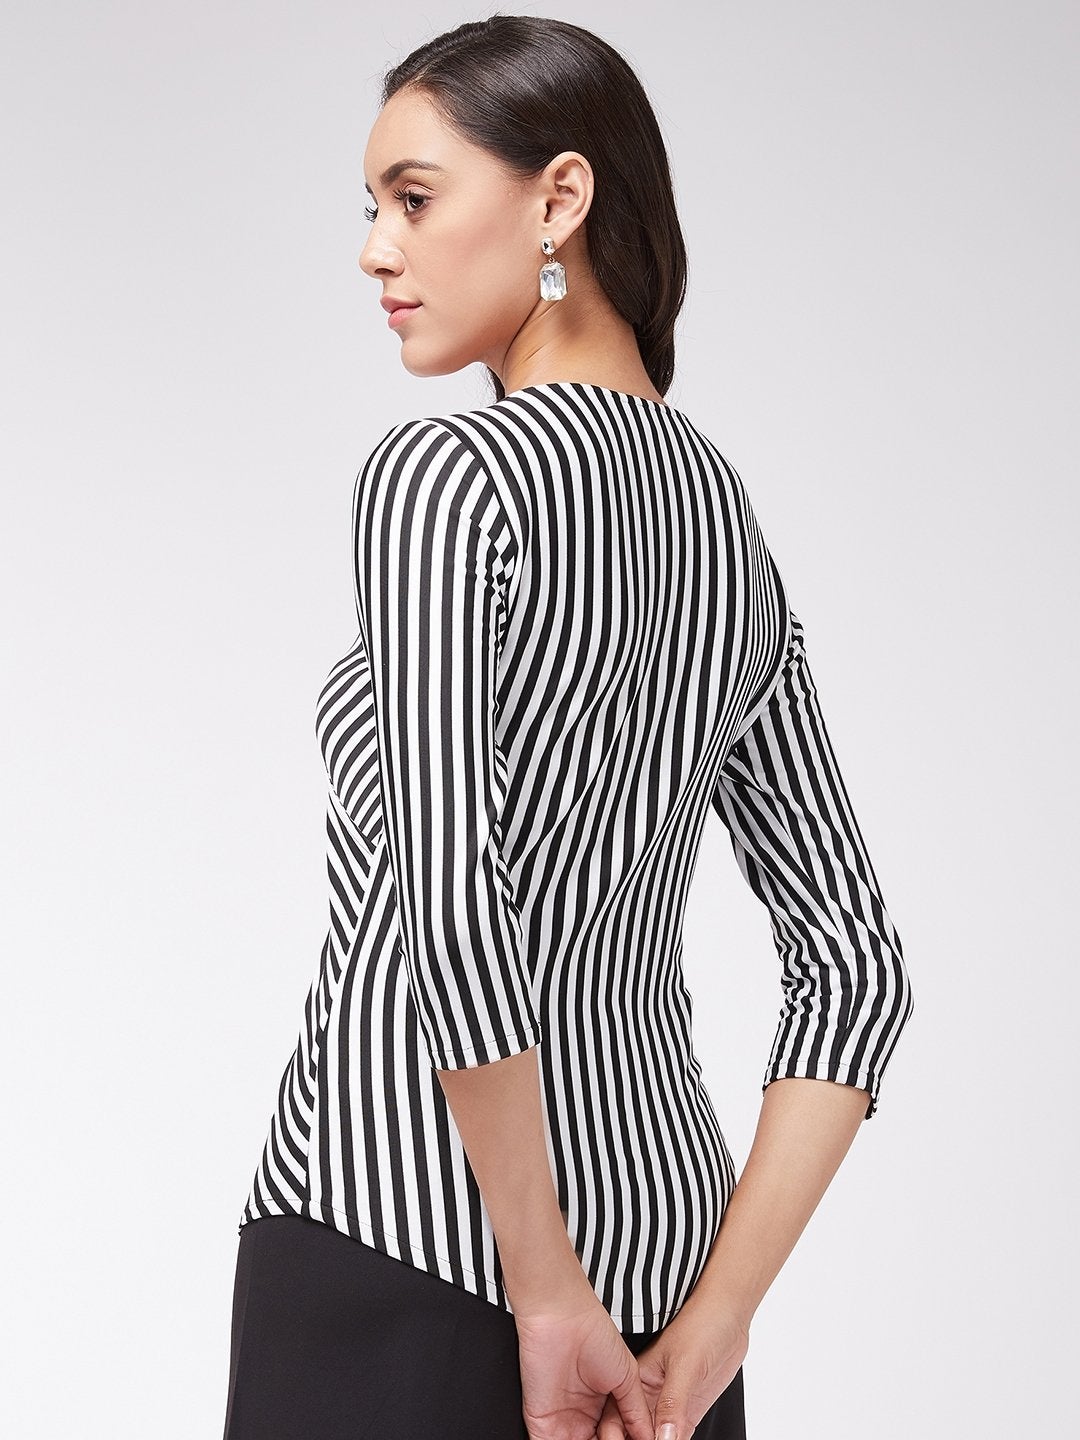 Women's Monocromatic Stripe Overlap Top - Pannkh